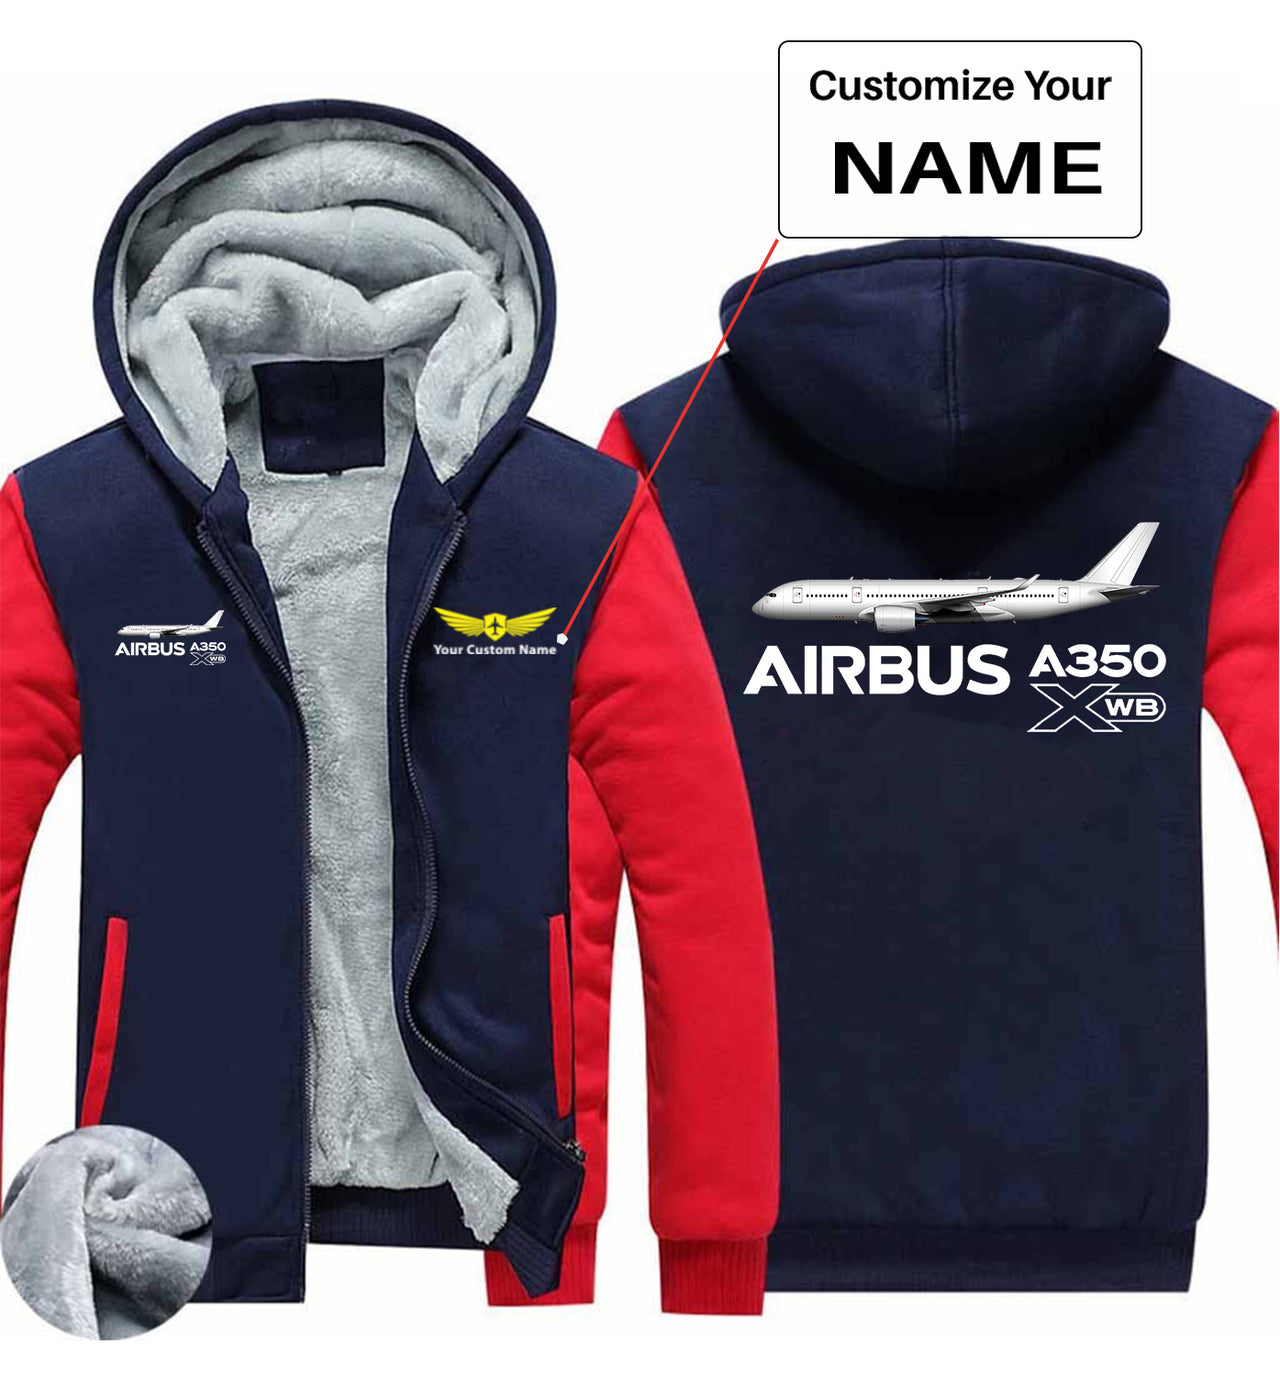 The Airbus A350 WXB Designed Zipped Sweatshirts